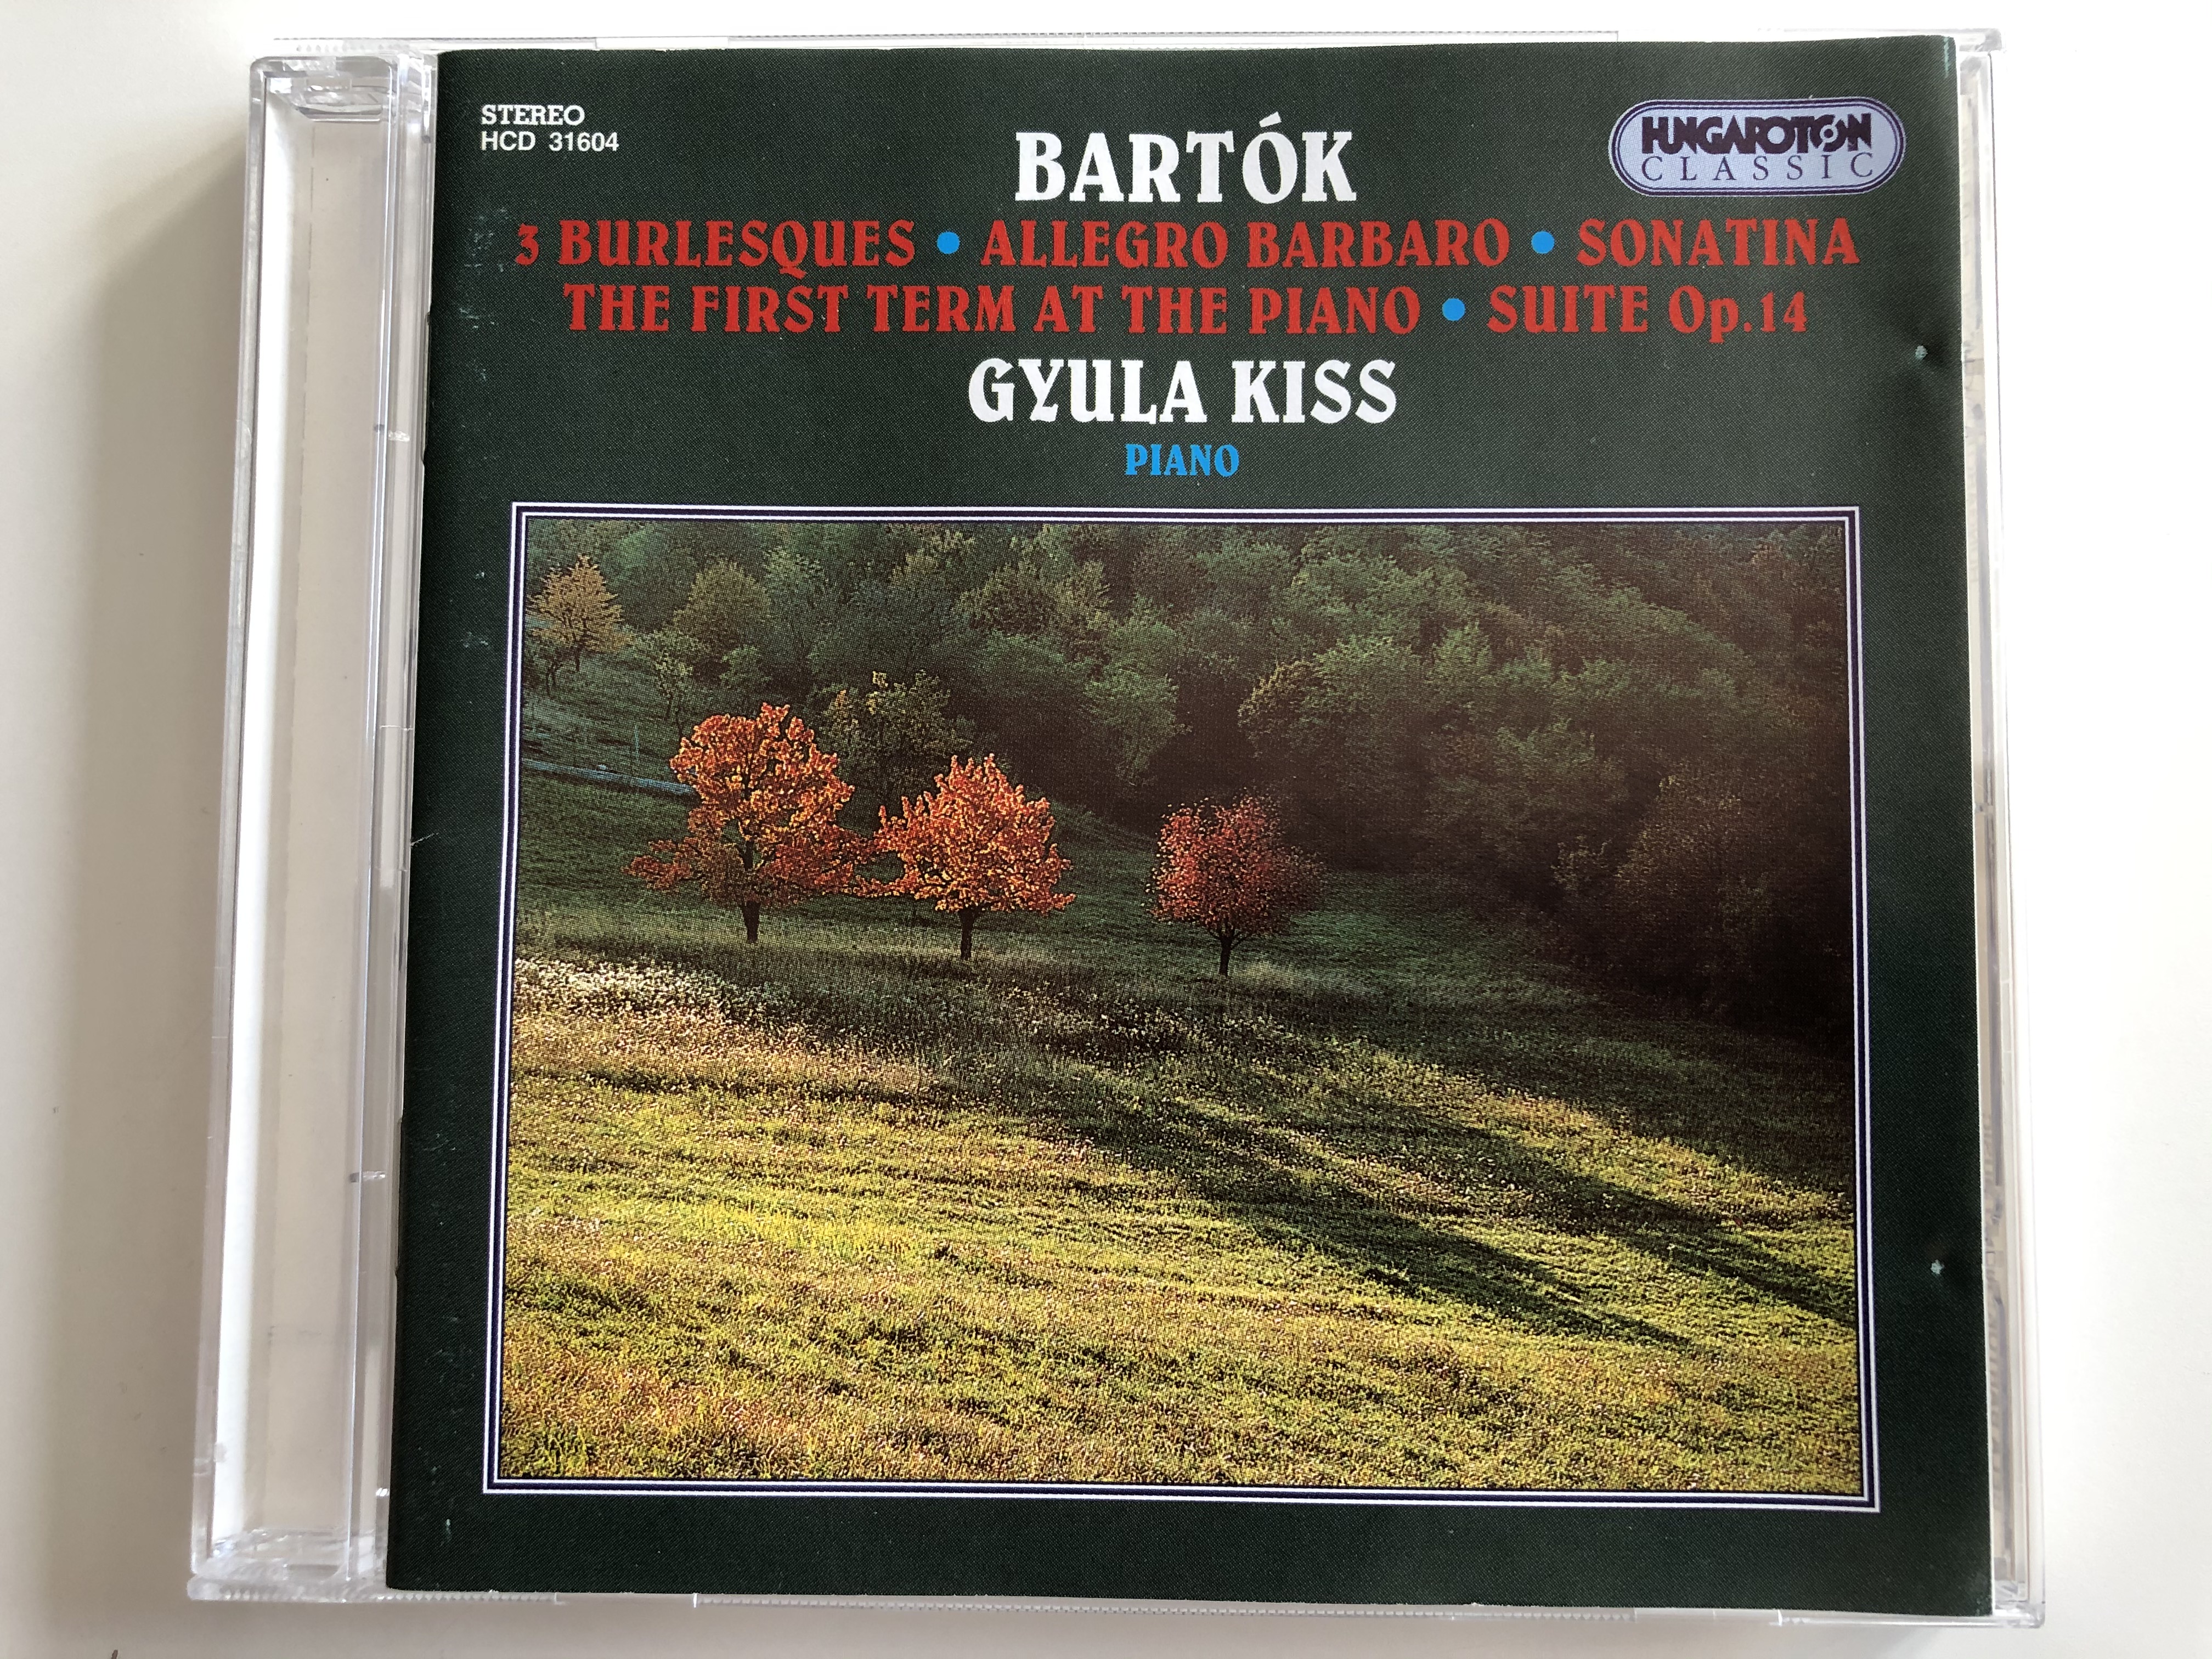 bartok-3-burlesques-allegro-barbaro-sonatina-the-first-term-at-the-piano-suite-op.-14-gyula-kiss-piano-hungaroton-classic-audio-cd-1995-stereo-hcd-31604-1-.jpg